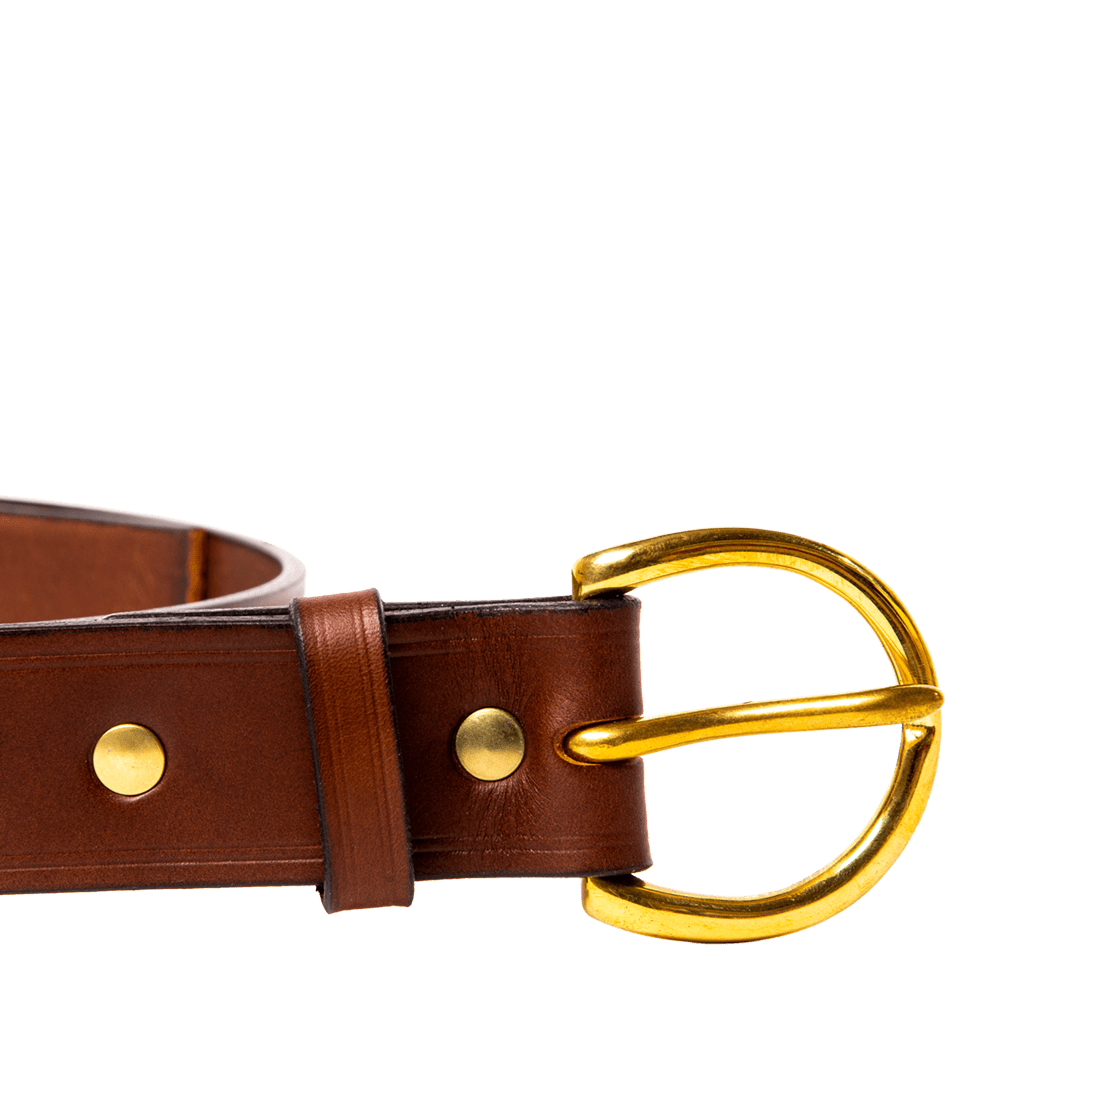 Leather London Dee belt in Italian saddle hide chestnut colour, handmade by Mackenzie Leather Edinburgh.